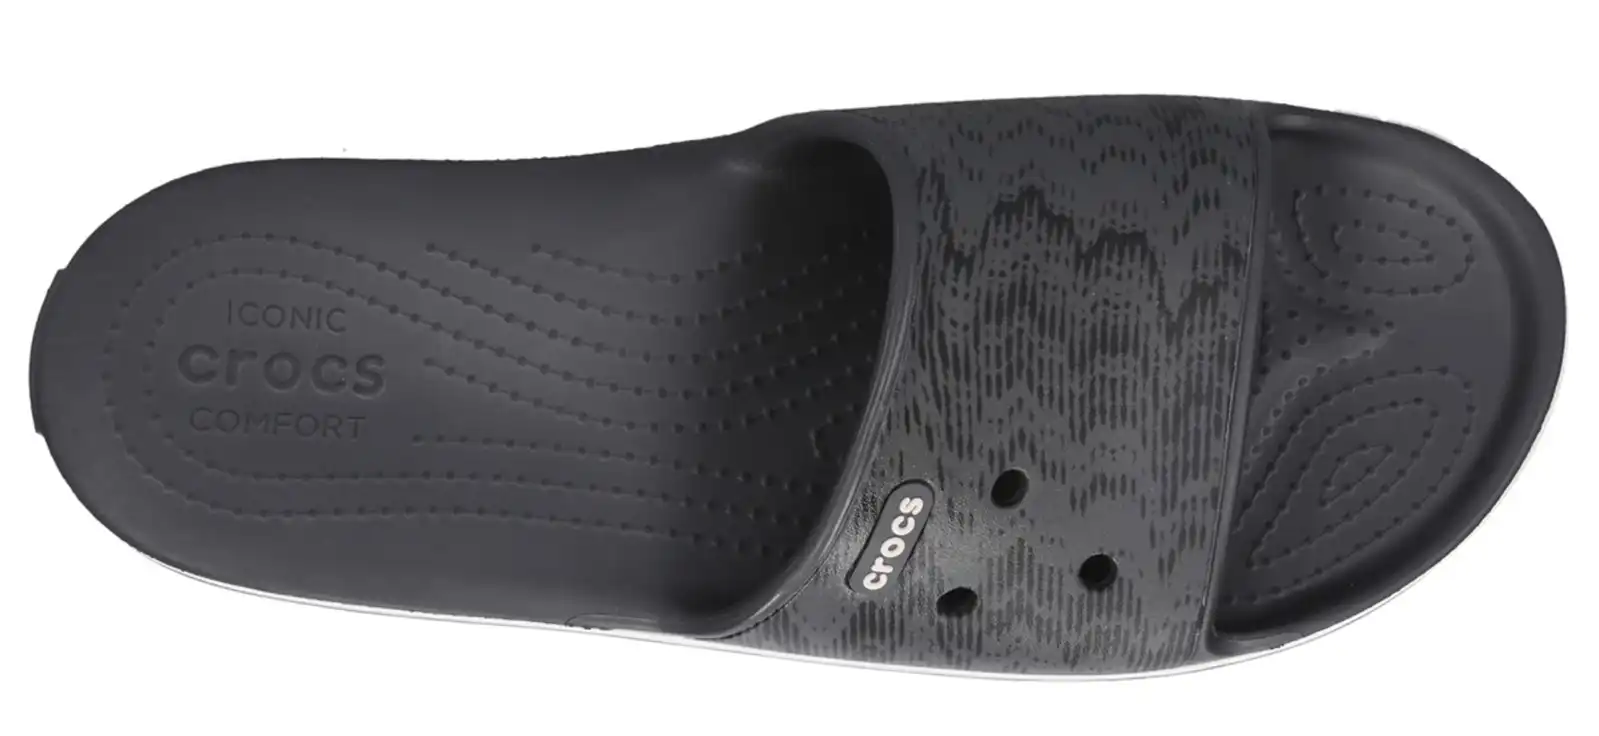 Crocs Crocband III Cardio Wave Slide Thongs Flip Flops Relaxed Fit - Graphite/Black